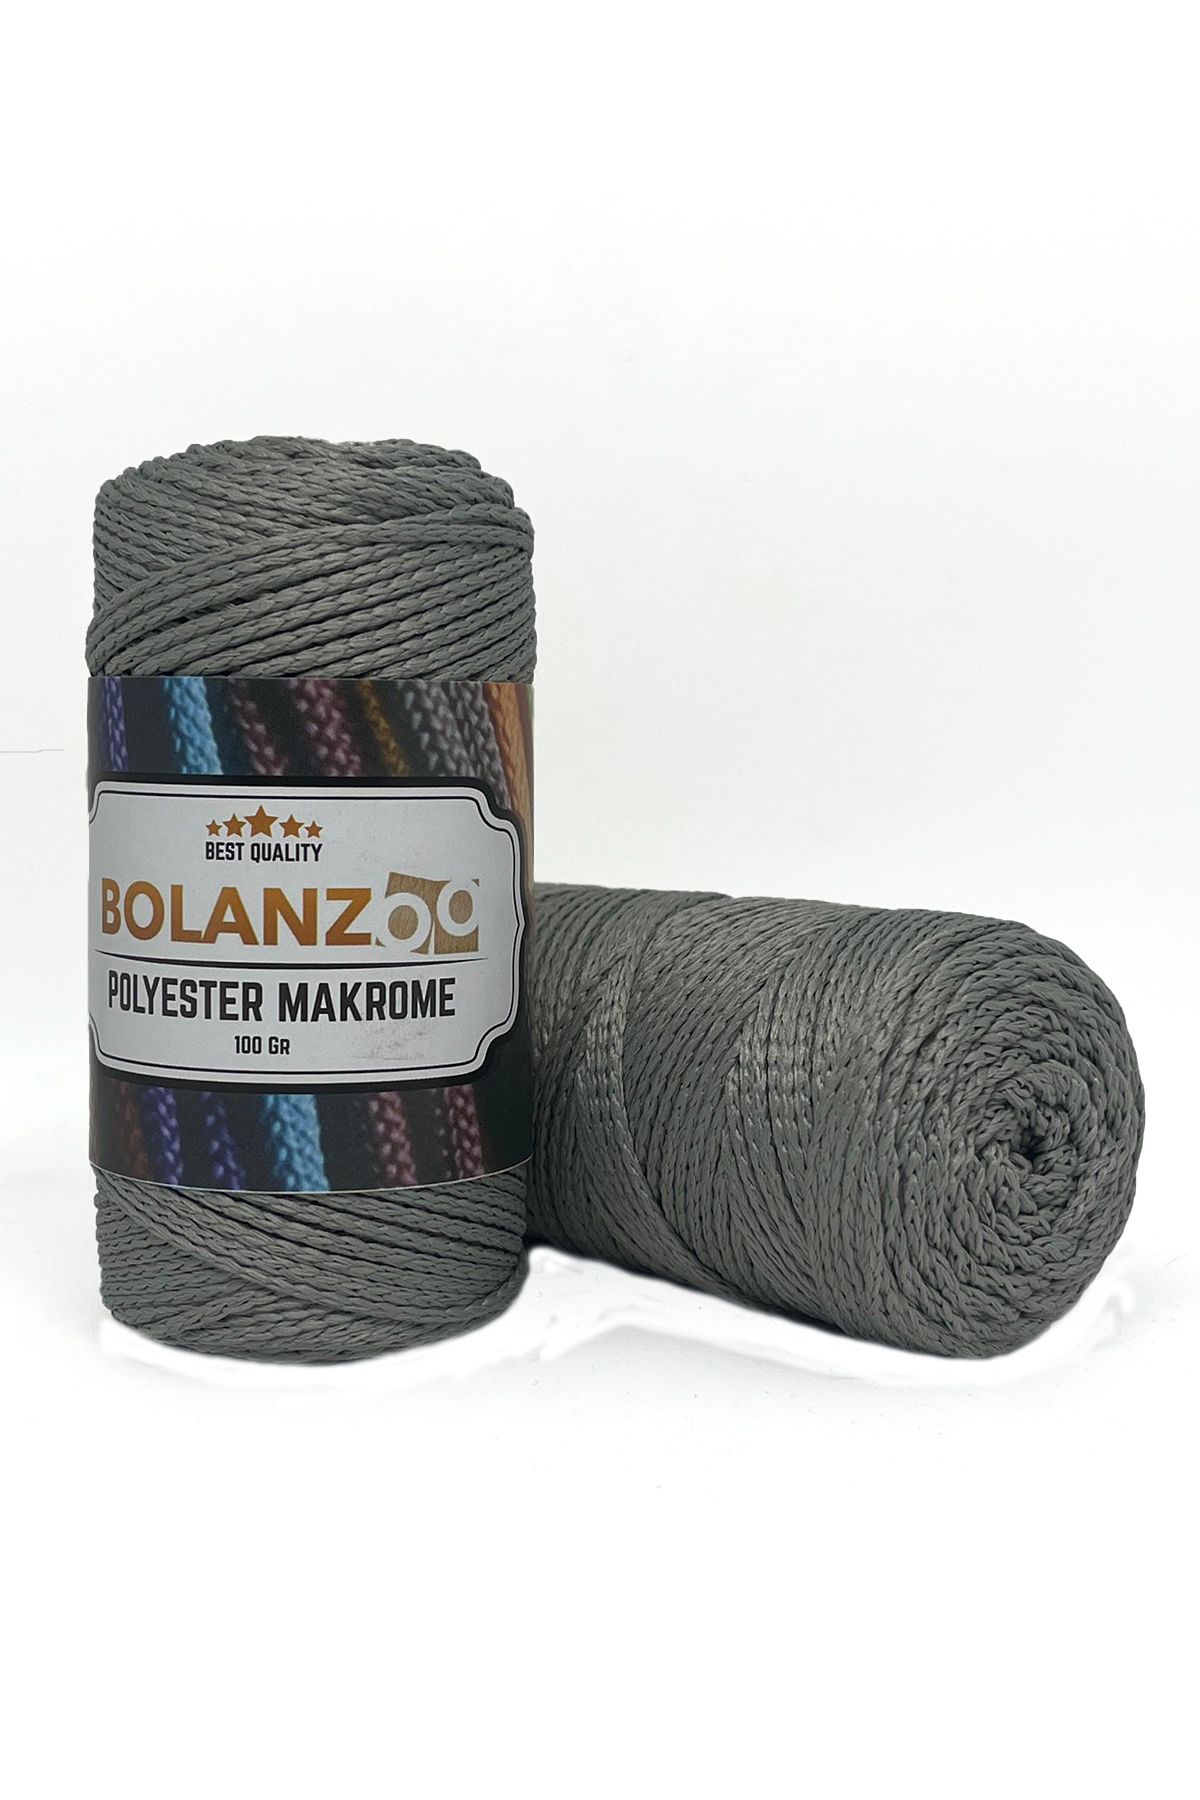 Bolanzoo Polyester Makrome Ipi 2 Adet 100gr Koyu Gri 3mm Örgü Ipi